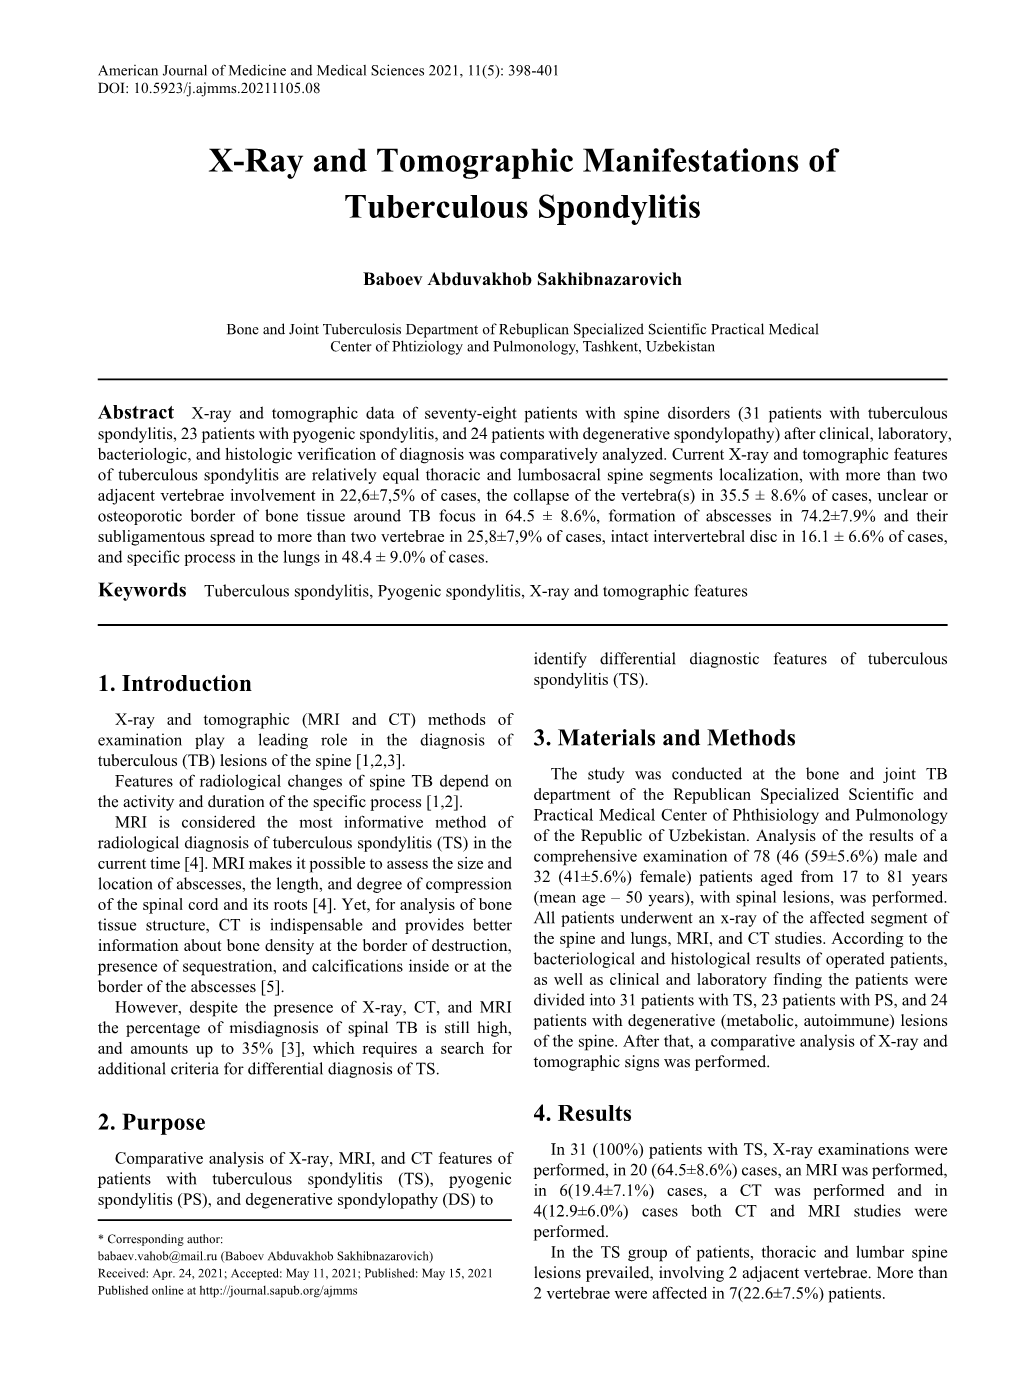 Tuberculous Spondylitis, Pyogenic Spondylitis, X-Ray and Tomographic Features